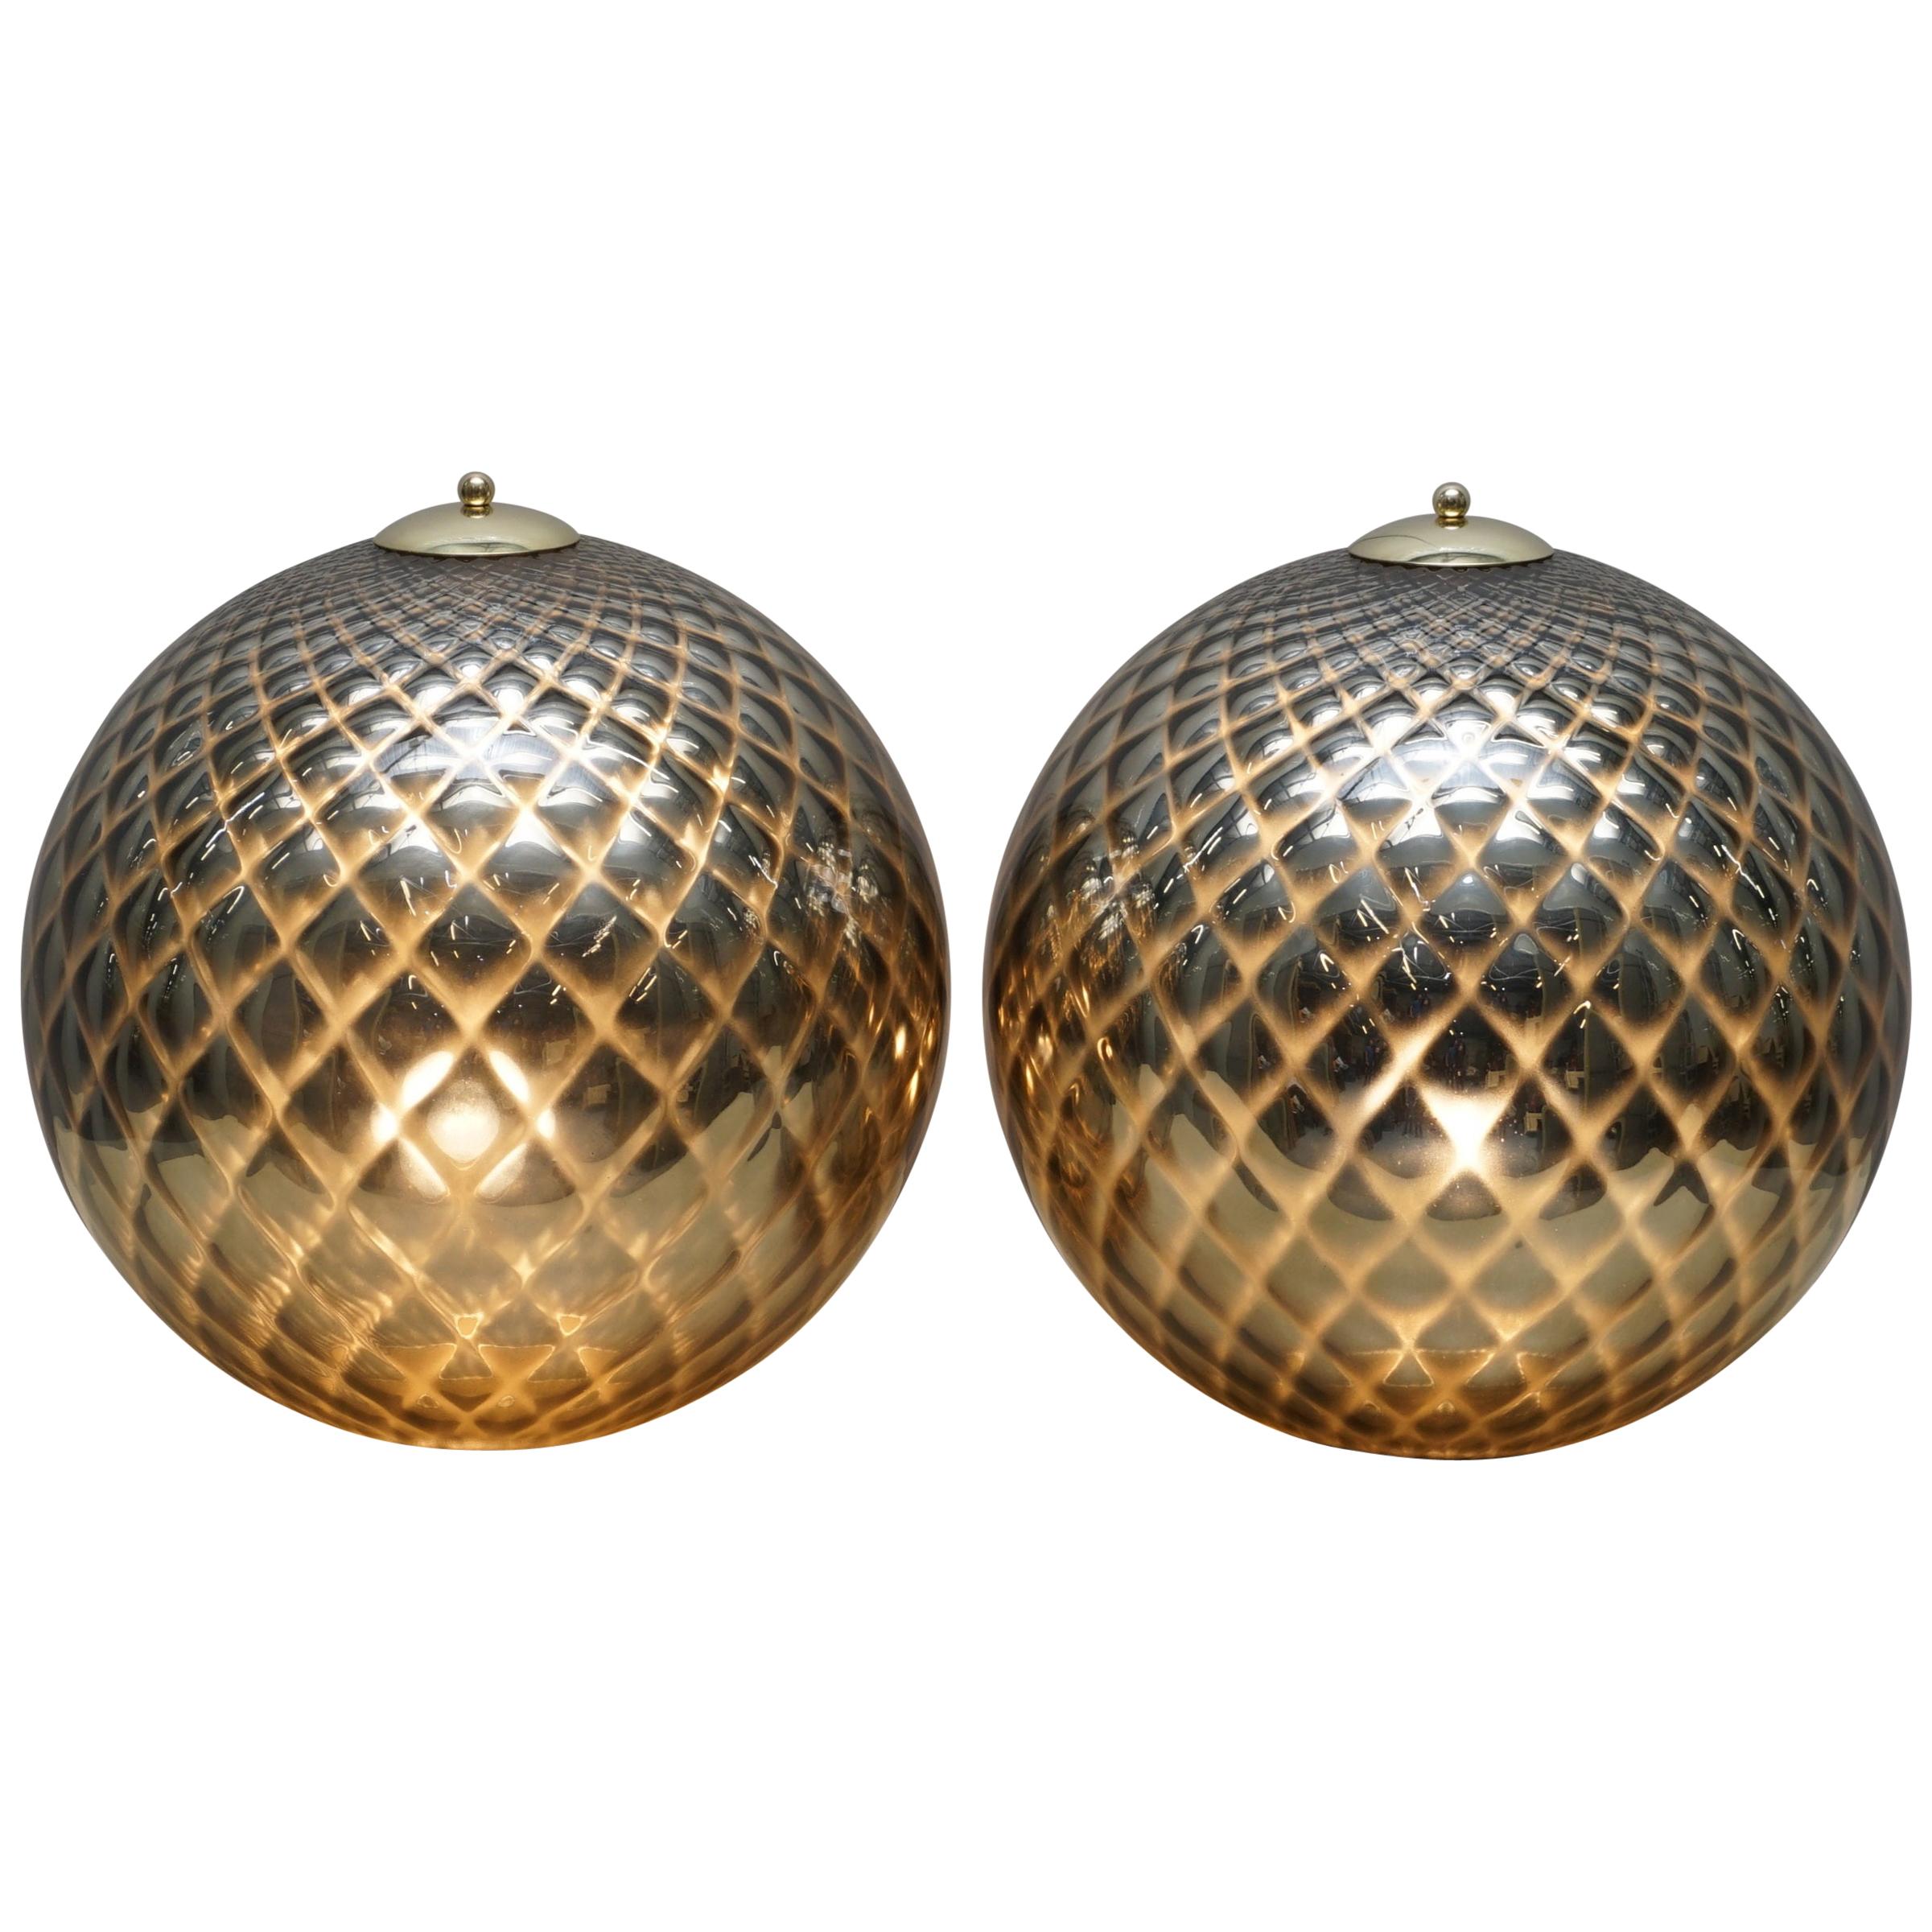 Ein wunderschönes Paar originaler Muranoglas-Diamant-Patina-Kugel-Silber-Tischlampen